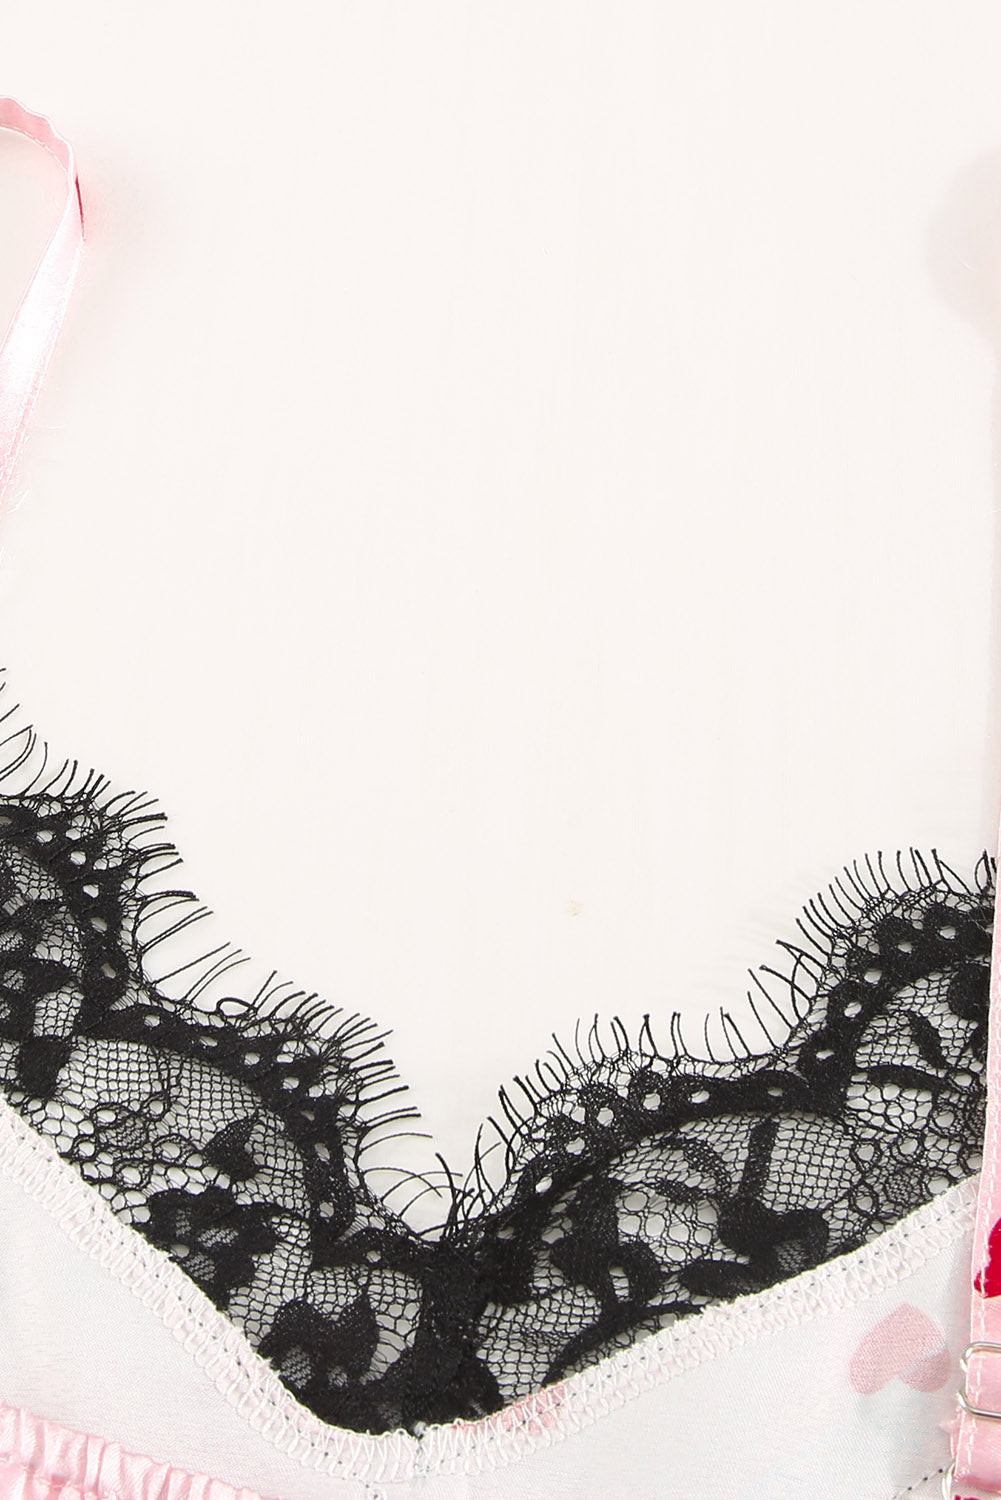 LC4512252-10-S, LC4512252-10-M, LC4512252-10-L, LC4512252-10-XL, LC4512252-10-2XL, Pink Women's Lace V Neck Valentine Heart Print Pajama Set Sleepwear